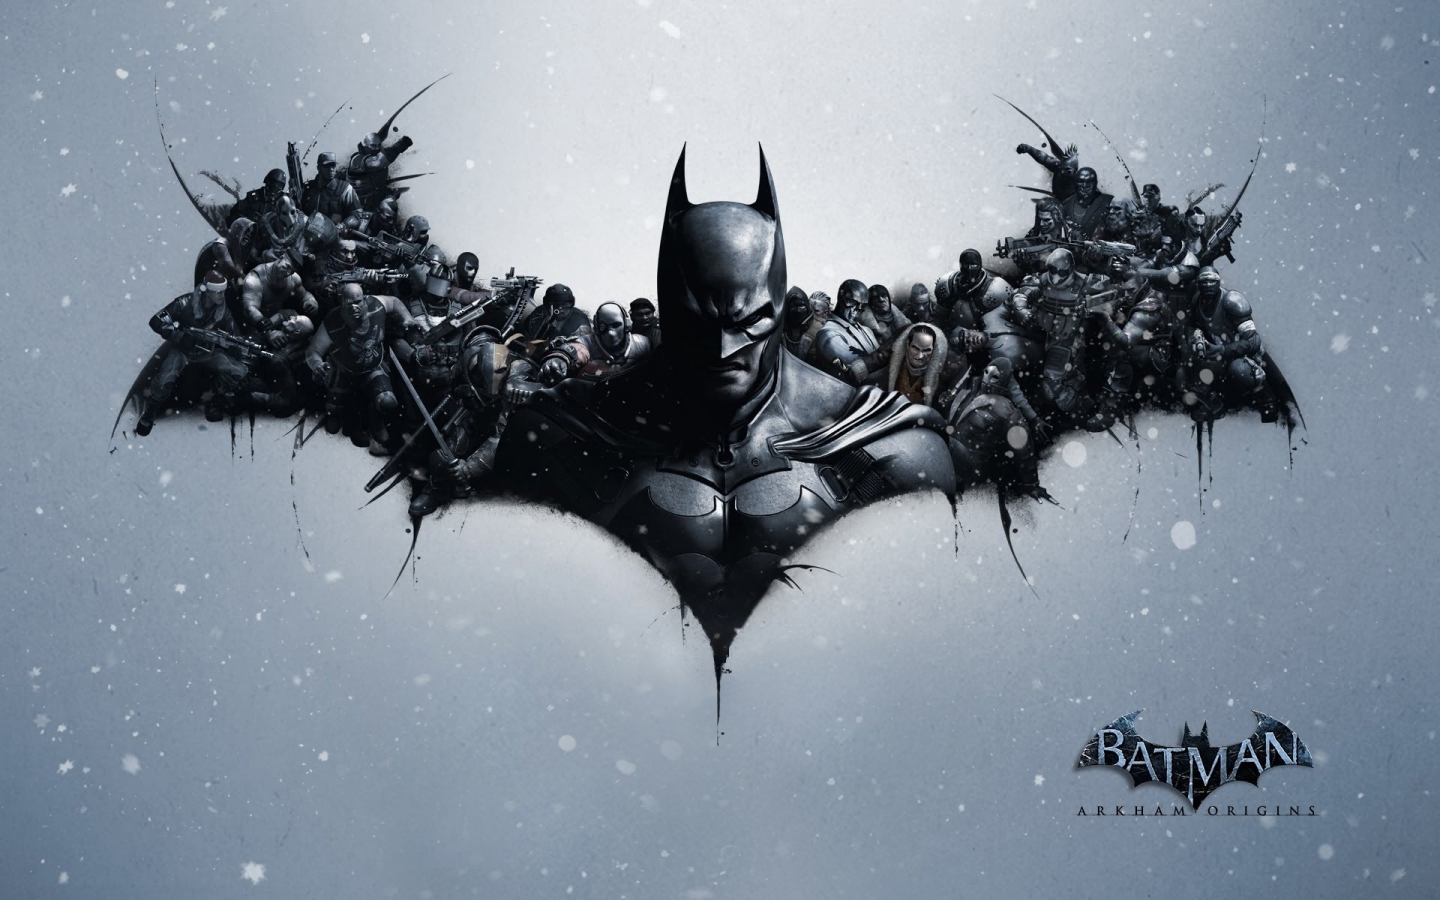 Batman Arkham Origins for 1440 x 900 widescreen resolution